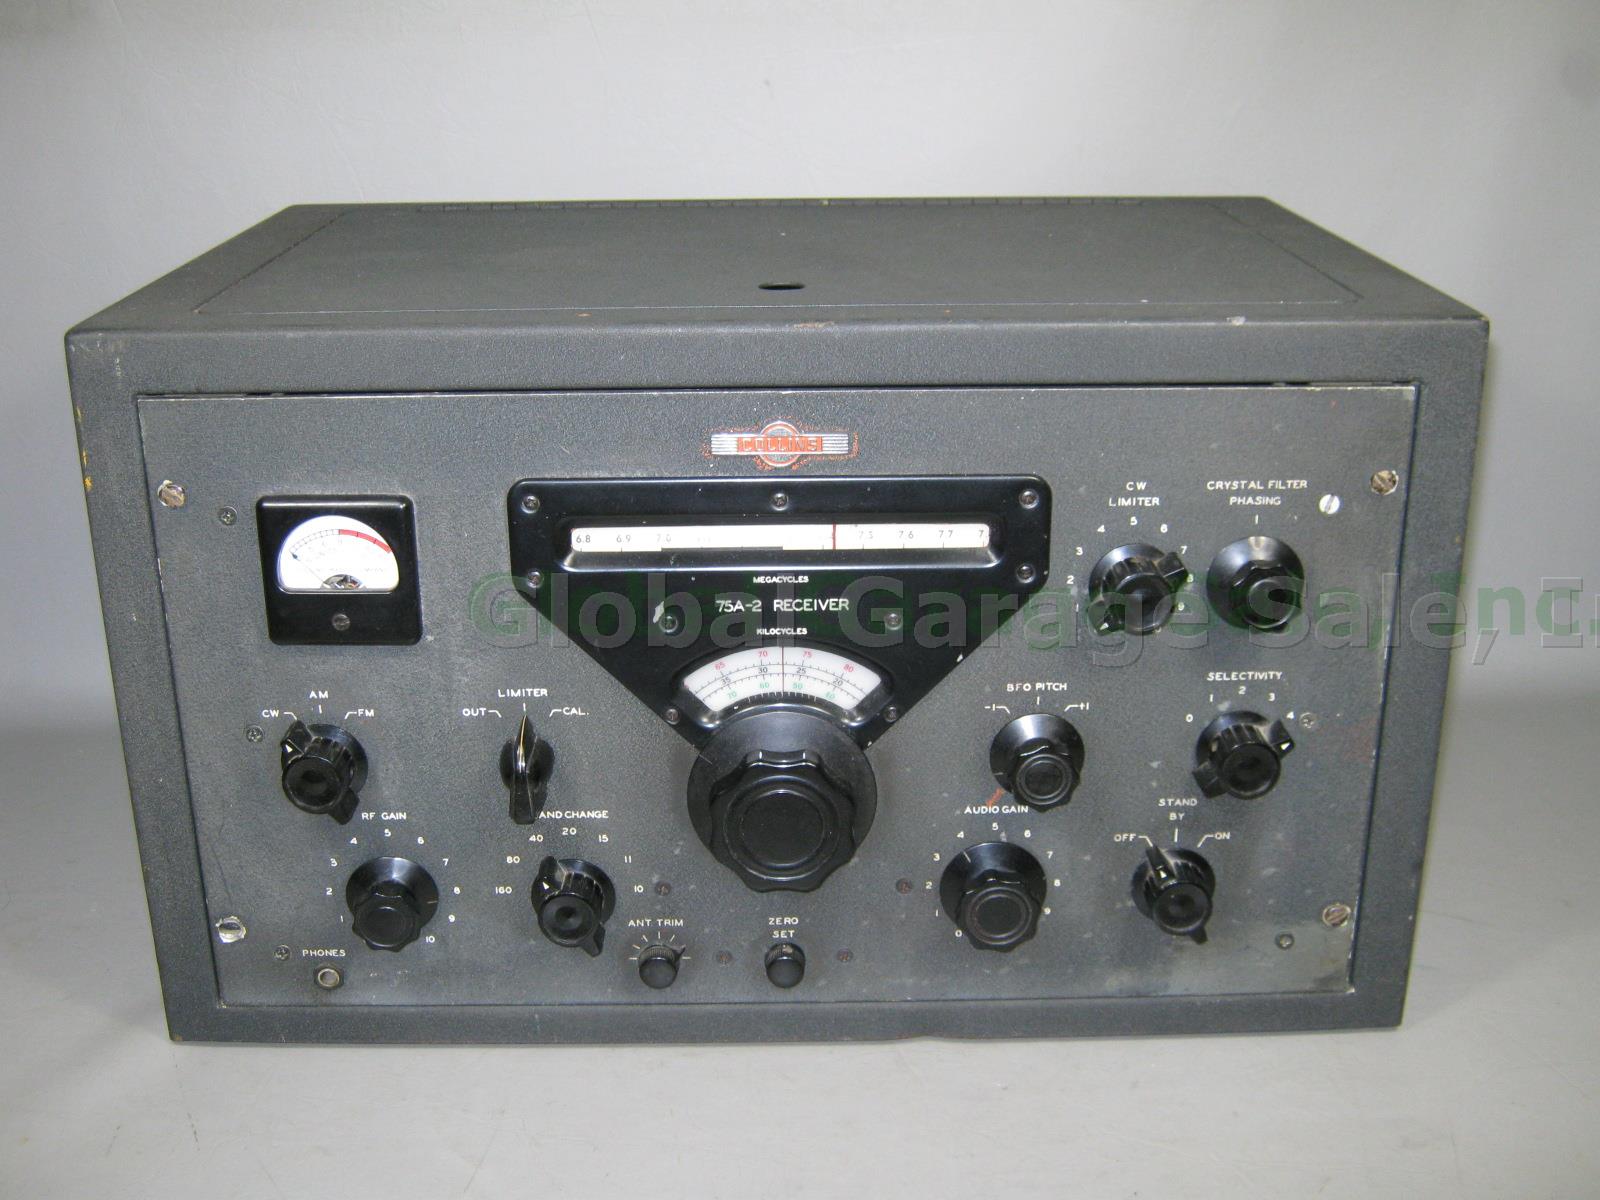 Vtg Collins 75A-2 Ham Amateur Radio Receiver For Parts Or Restoration NO RESERVE